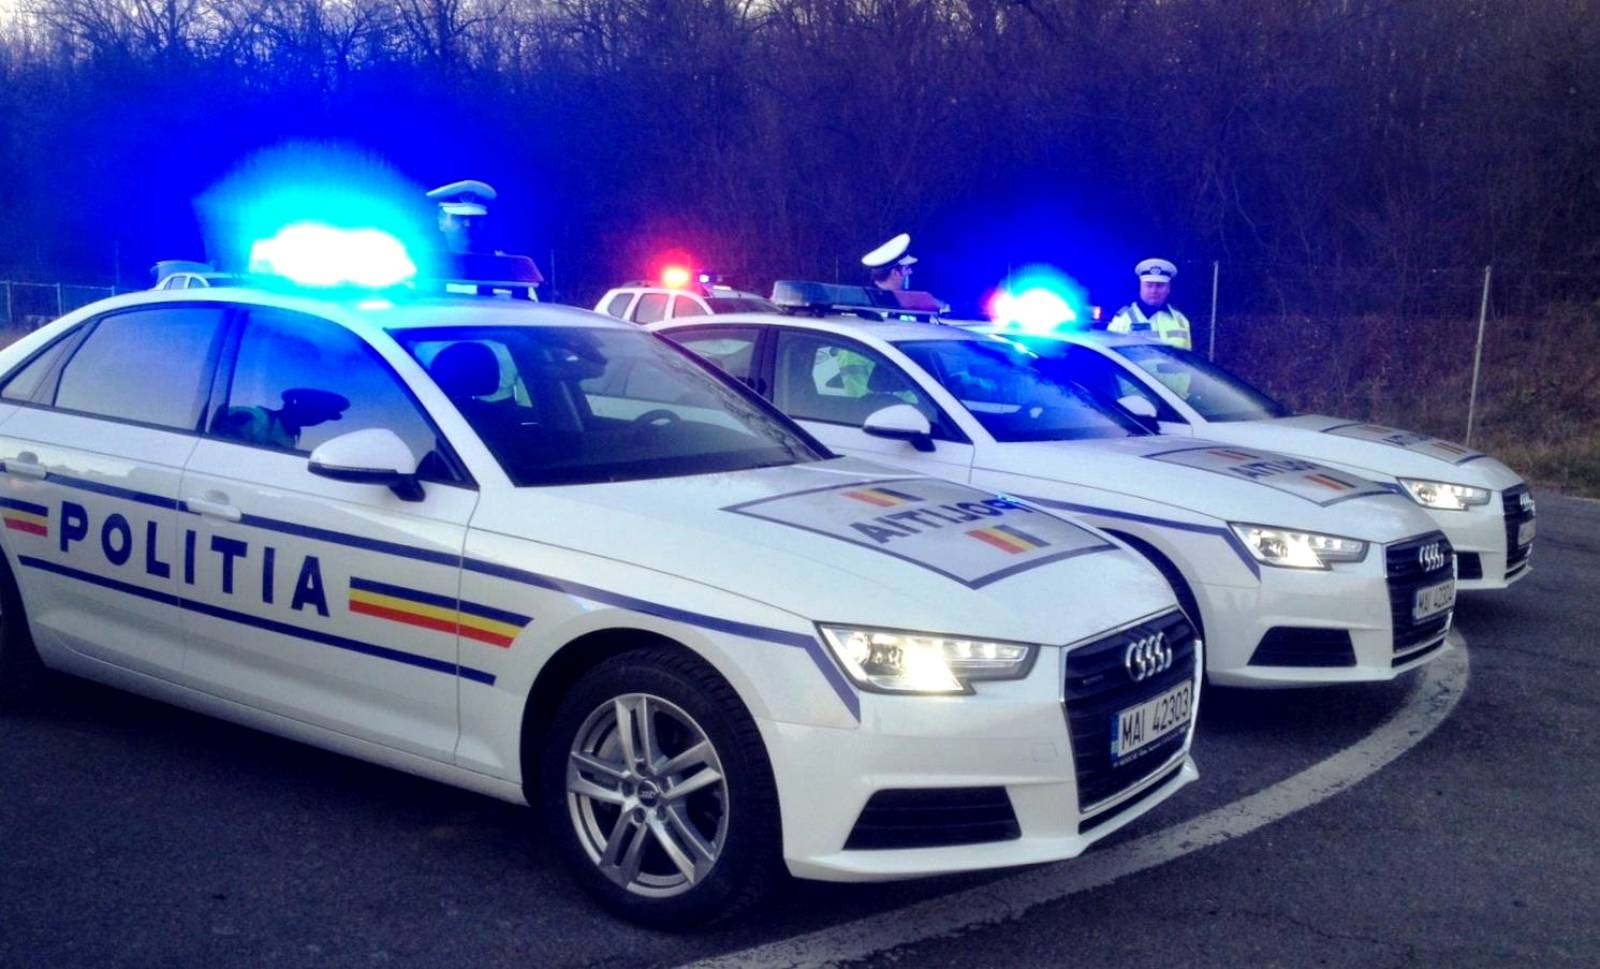 The Romanian police damaged the car